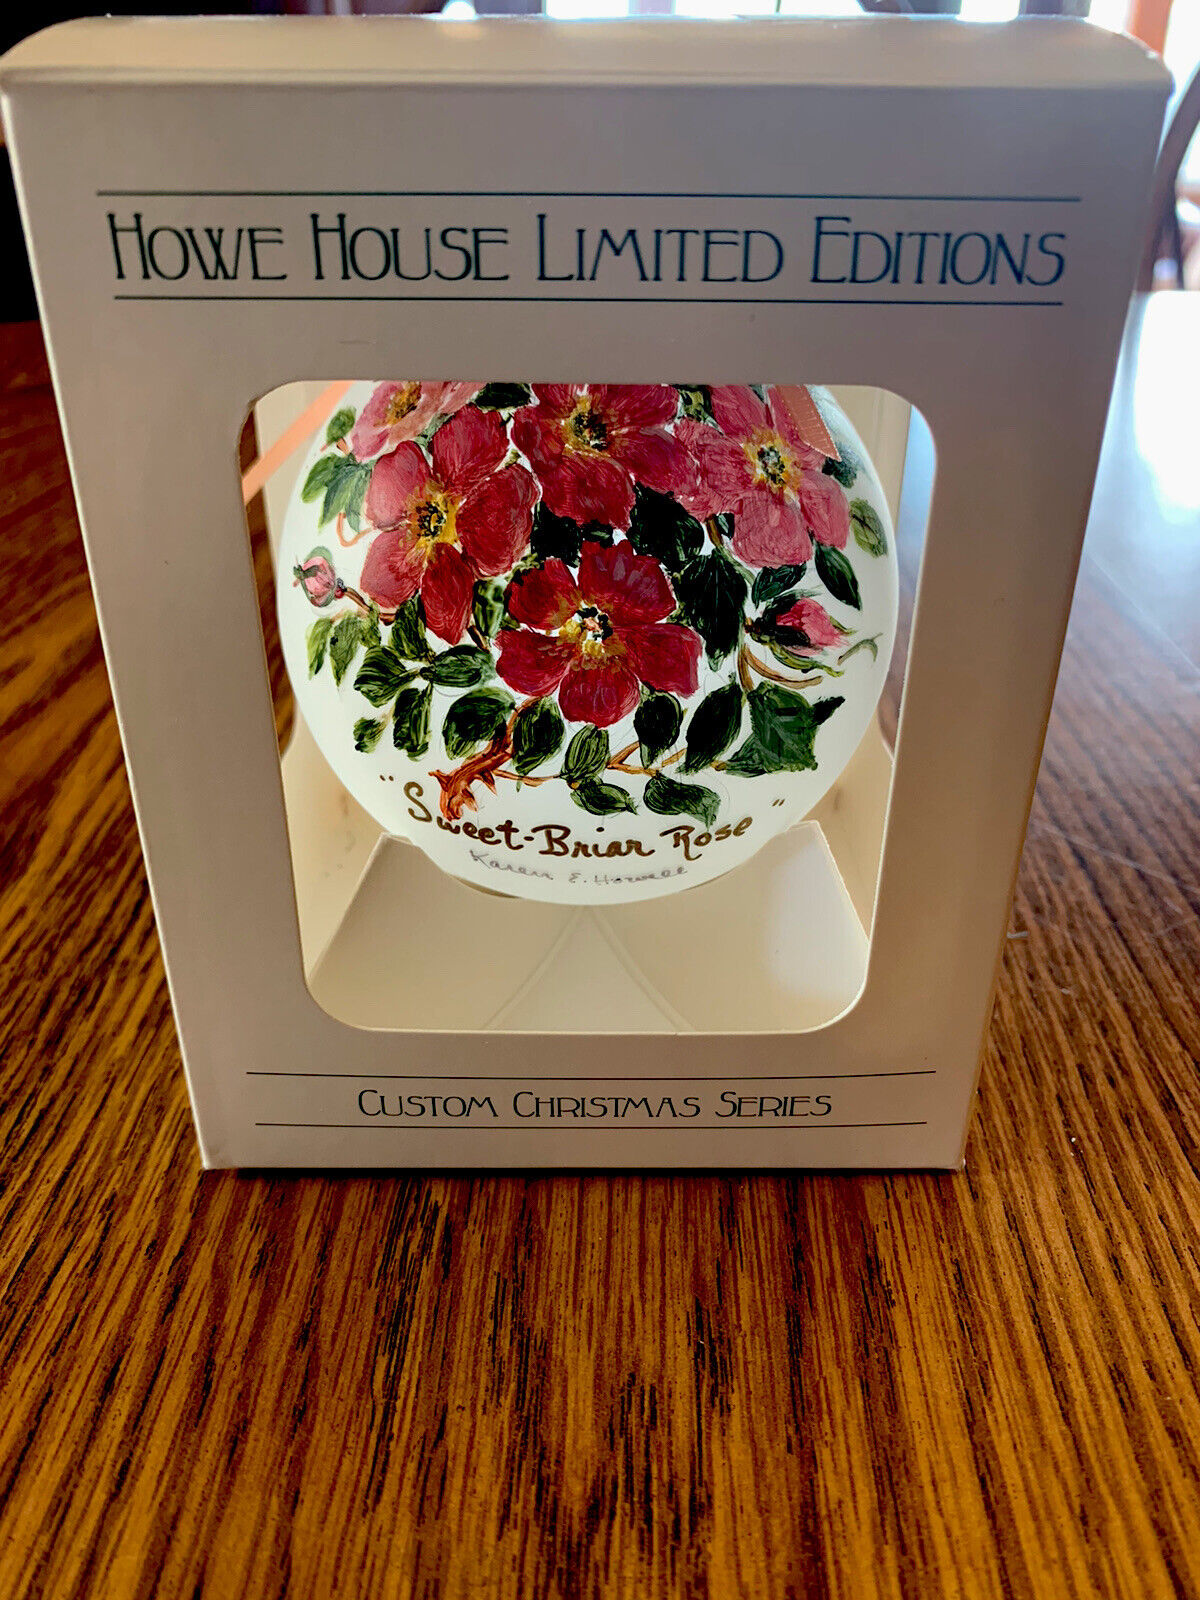 Howe House Ltd Edition Custom Christmas Series Sweet Briar Rose 2006 Ornament